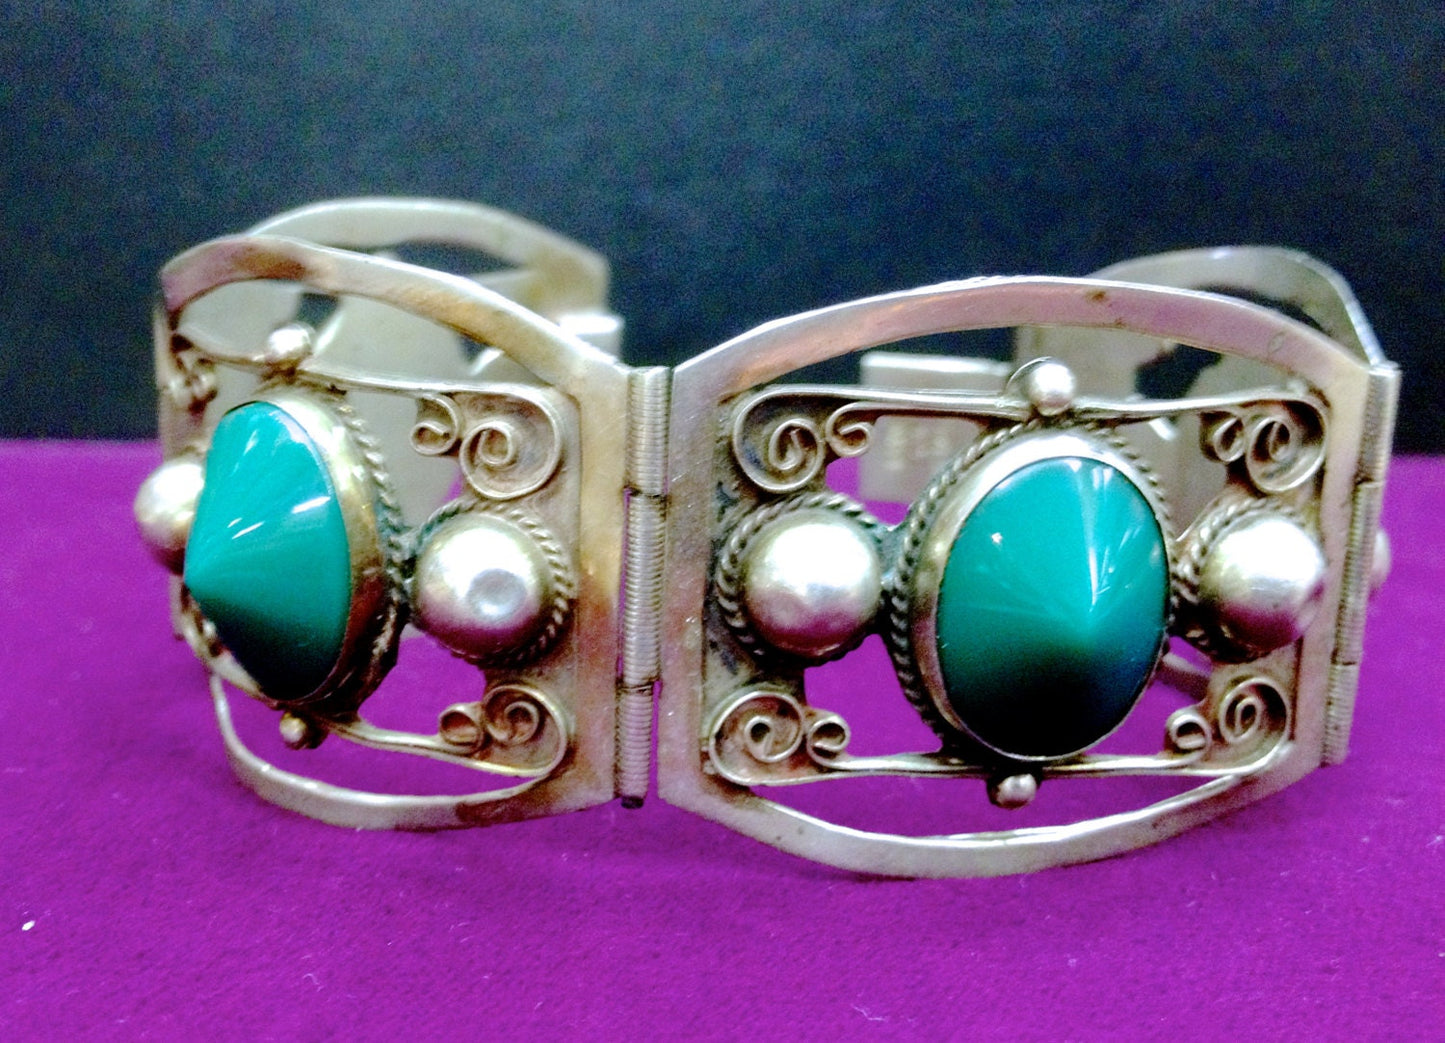 Vintage Sterling Silver Mexican Taxco Green Chrysoprase Art Nouveau Bracelet